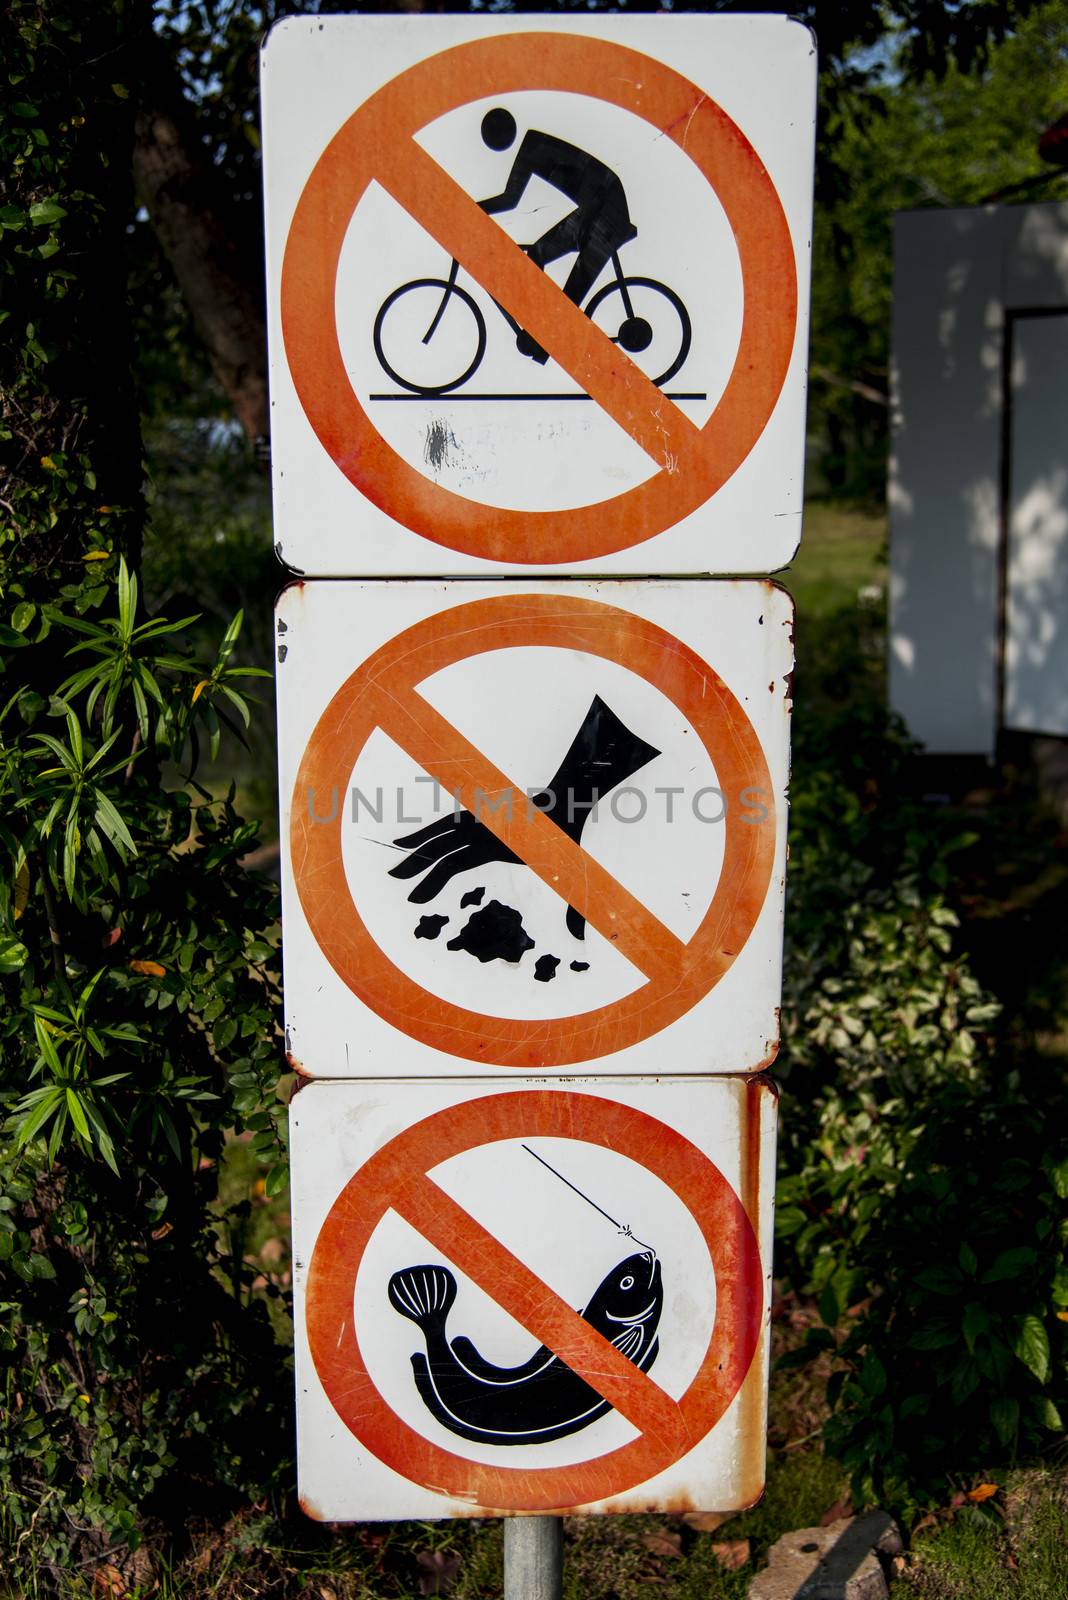 Prohibit sign in the park by gjeerawut